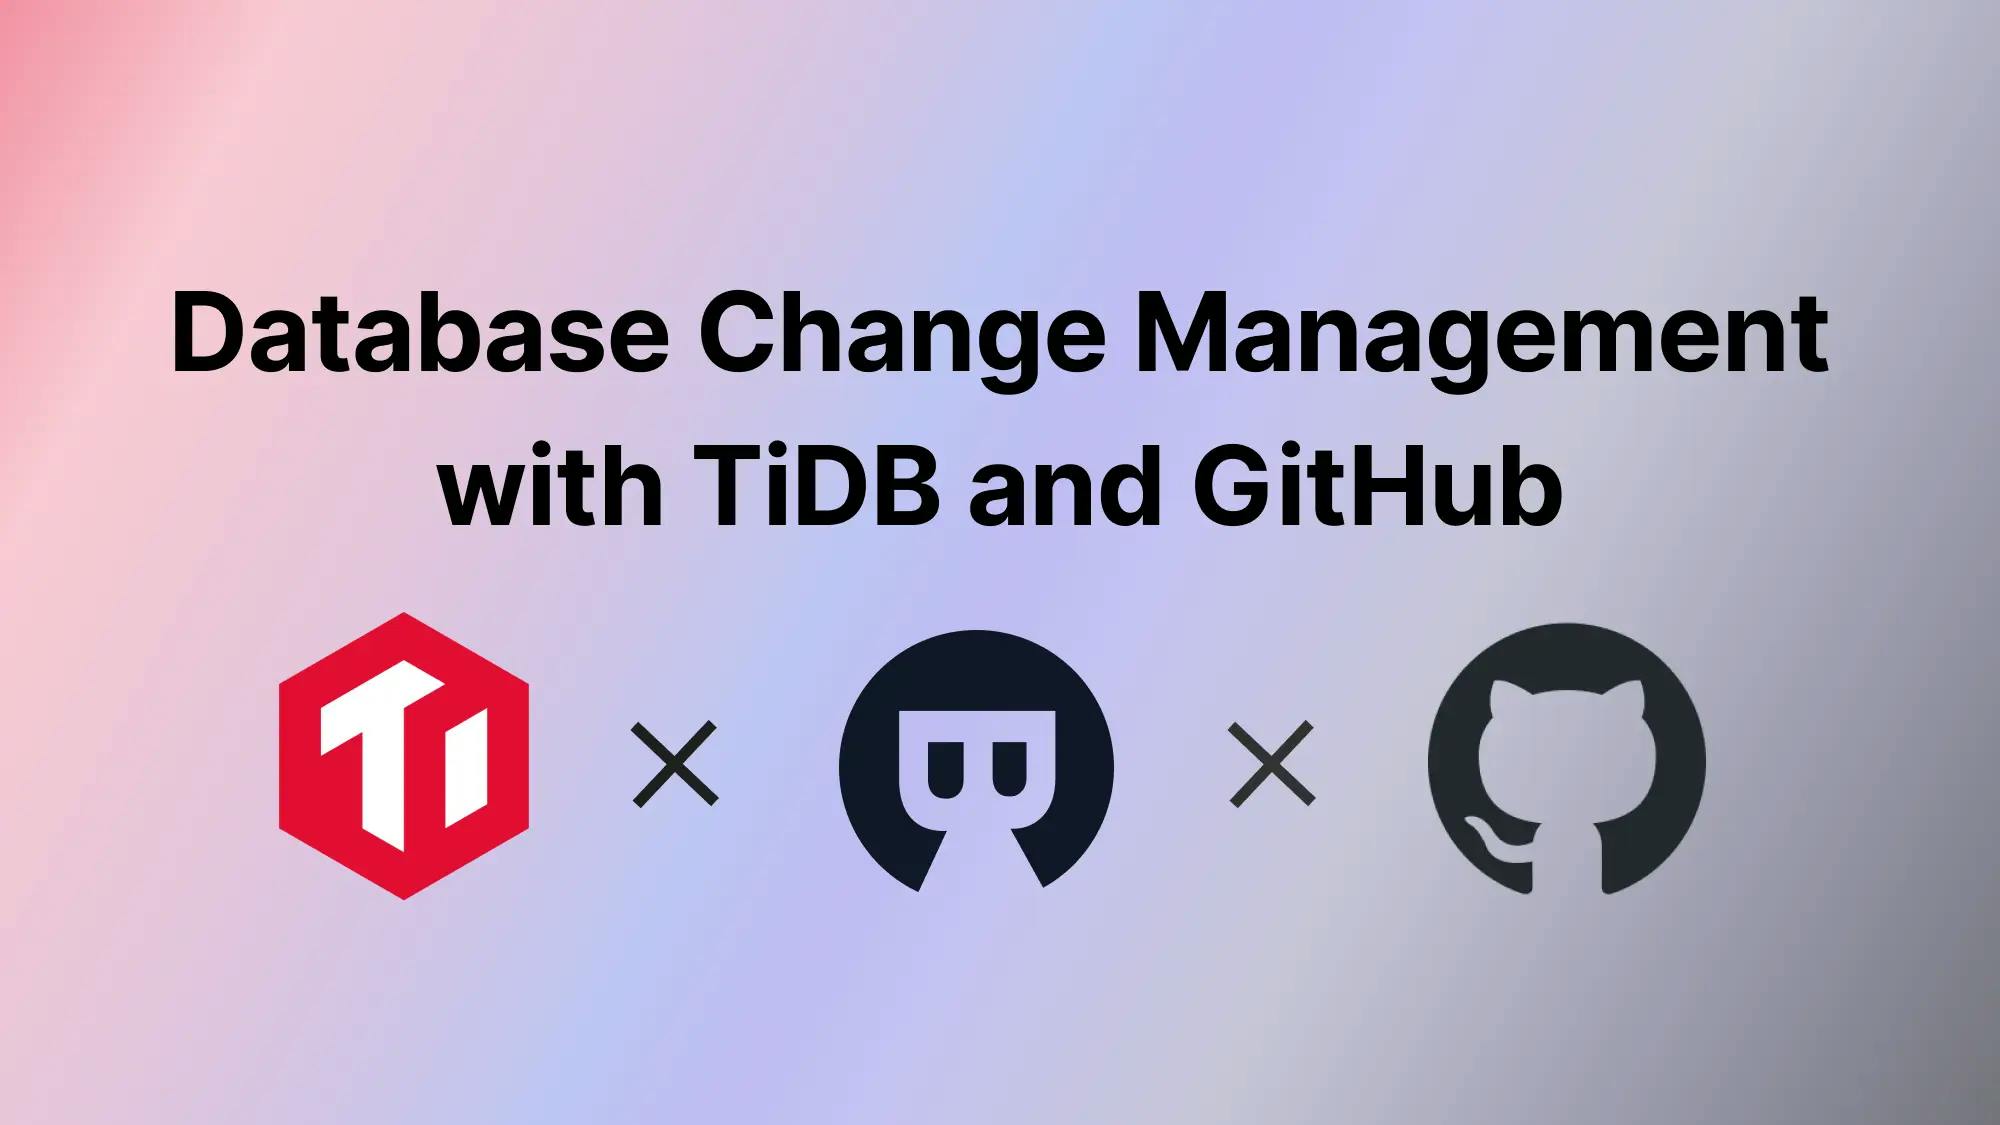 DevOps: Database Change Management with TiDB and GitHub